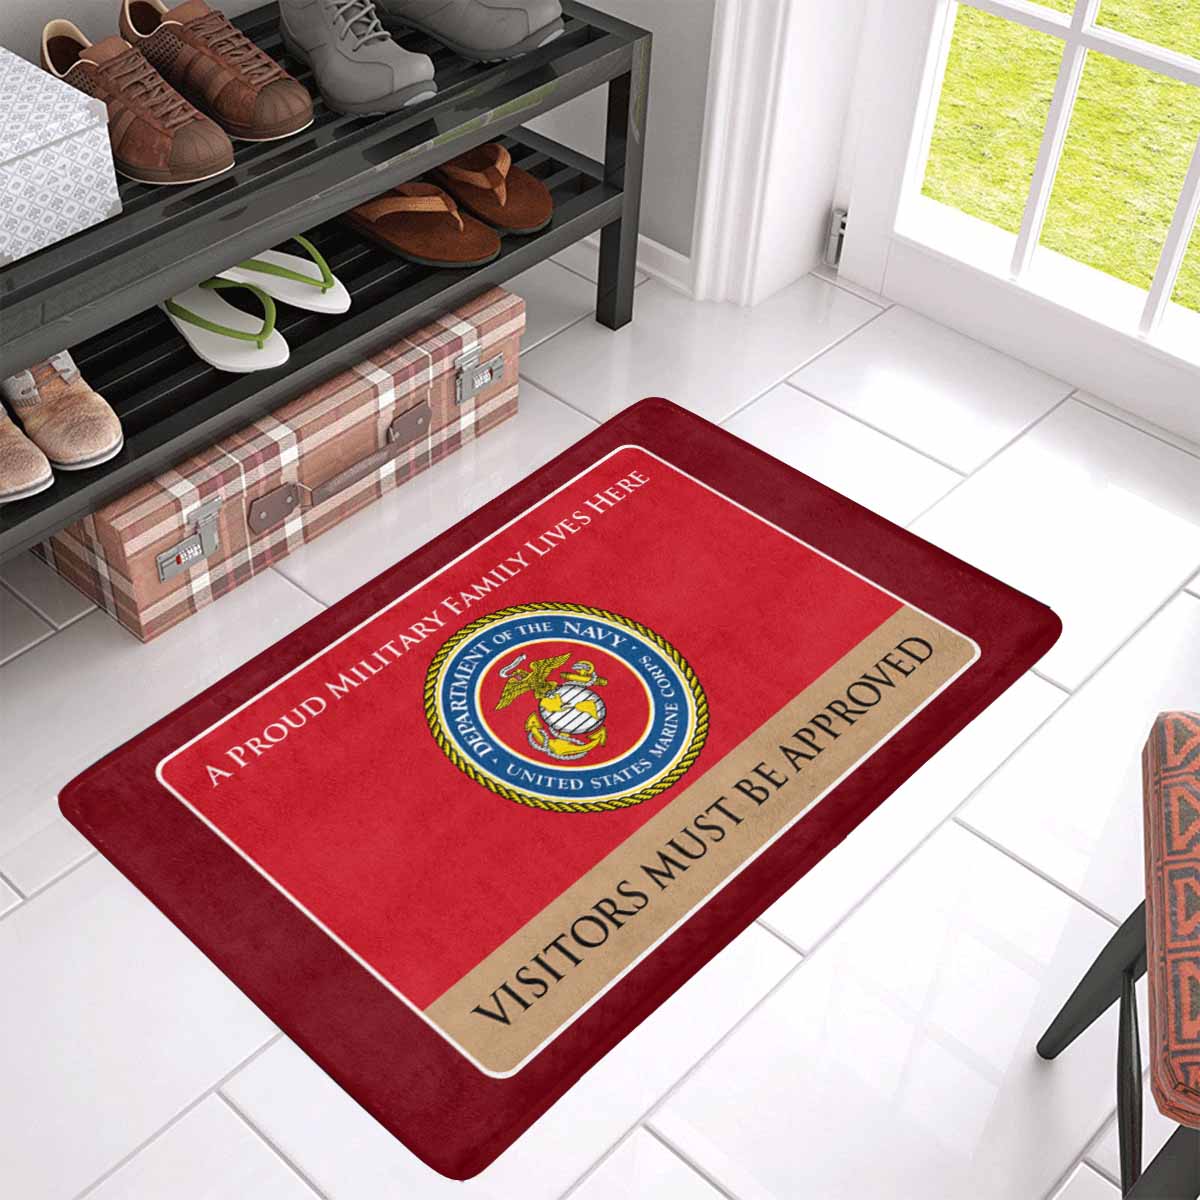 Proud Military Family USMC Doormat -Visitors must be approved-Doormat-USMC-Logo-Veterans Nation